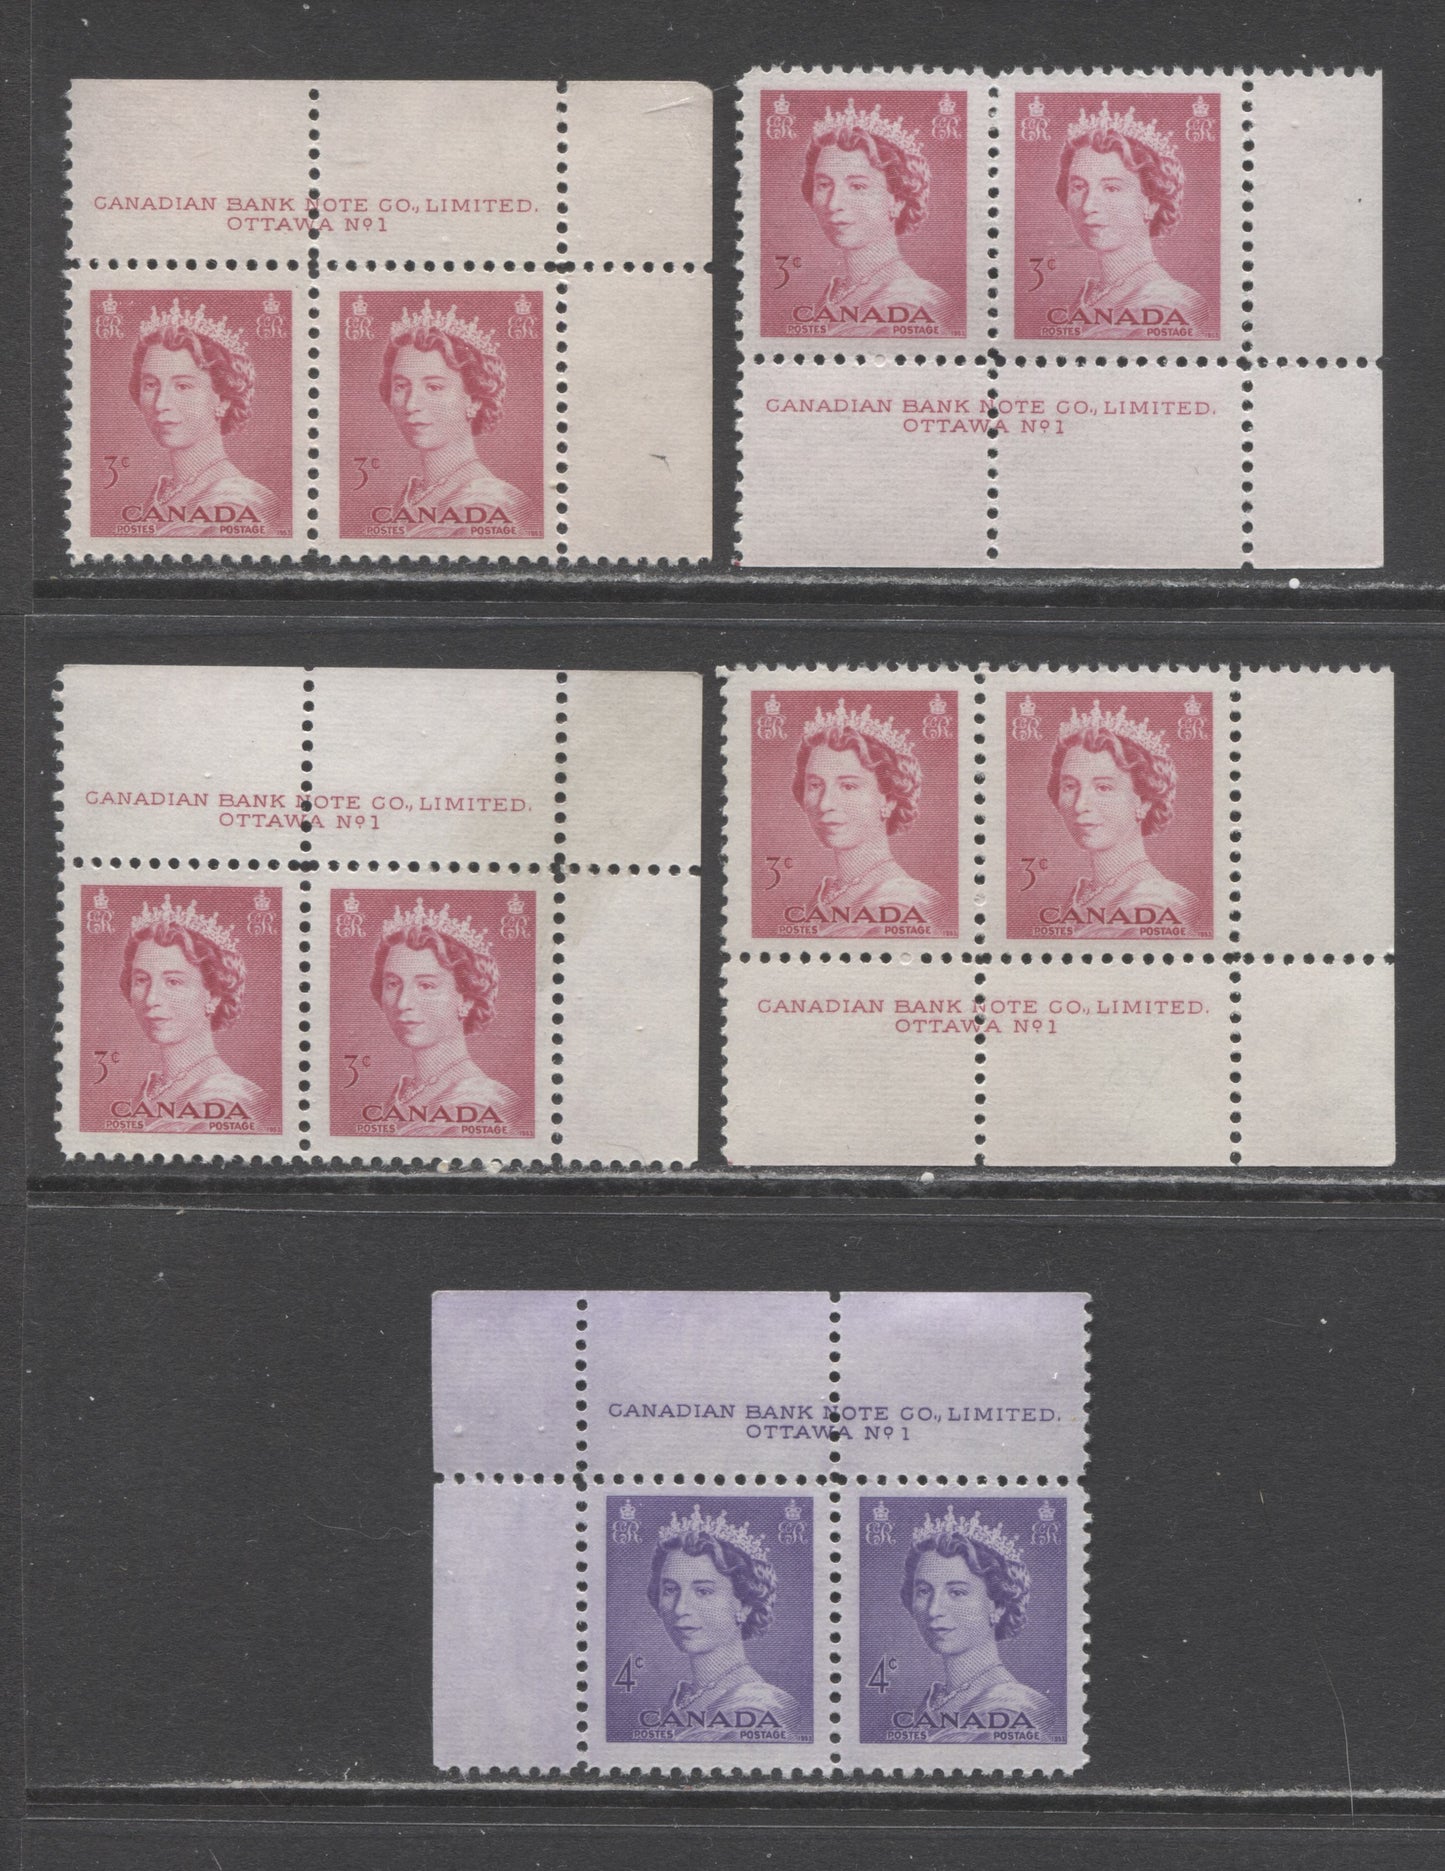 Lot 252 Canada #327-328 3c-4c Cerise & Violet Queen Elizabeth II, 1953-1954 Karsh Issue, 5 VFNH Plate 1 Inscription Pairs, Different Perfs